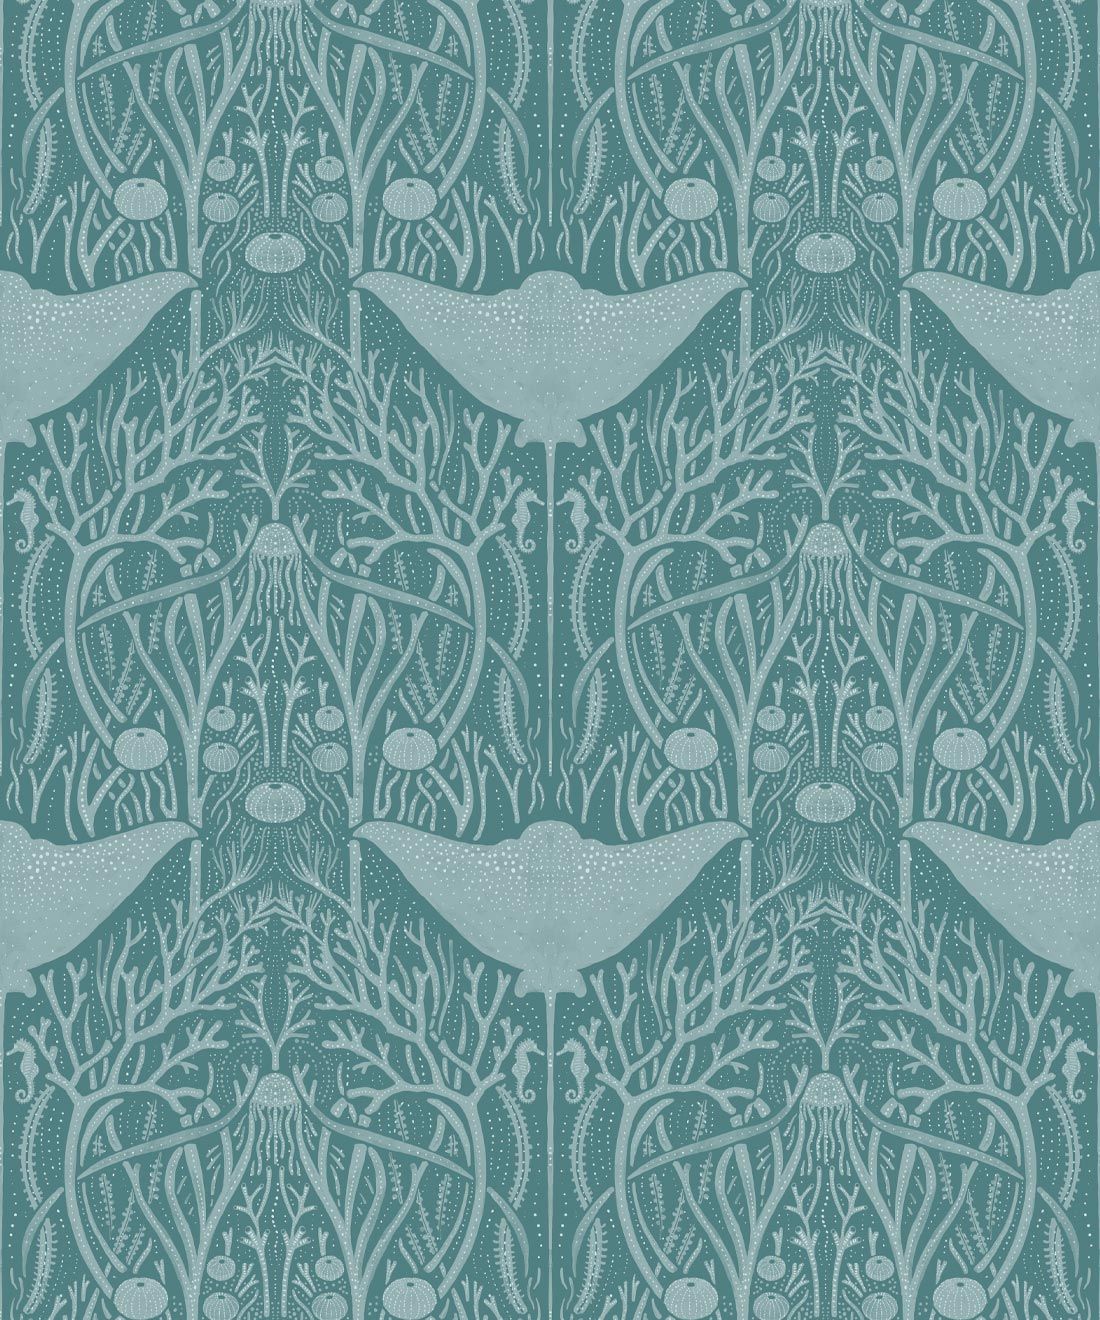 Manta Ray Wallpaper • Floral Wallpaper • Teal • Swatch